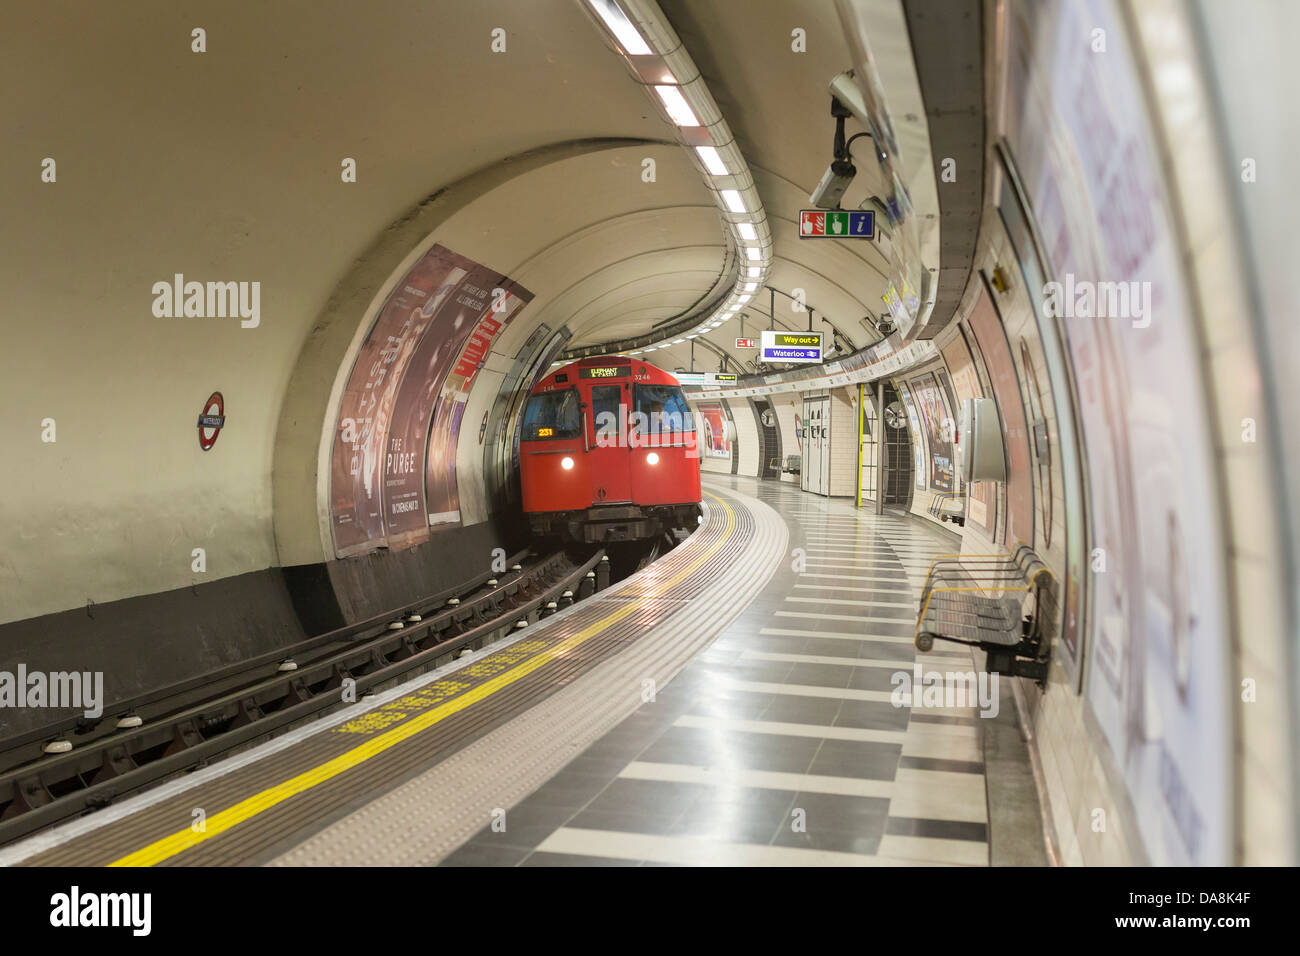 London underground platform, London, England Stock Photo